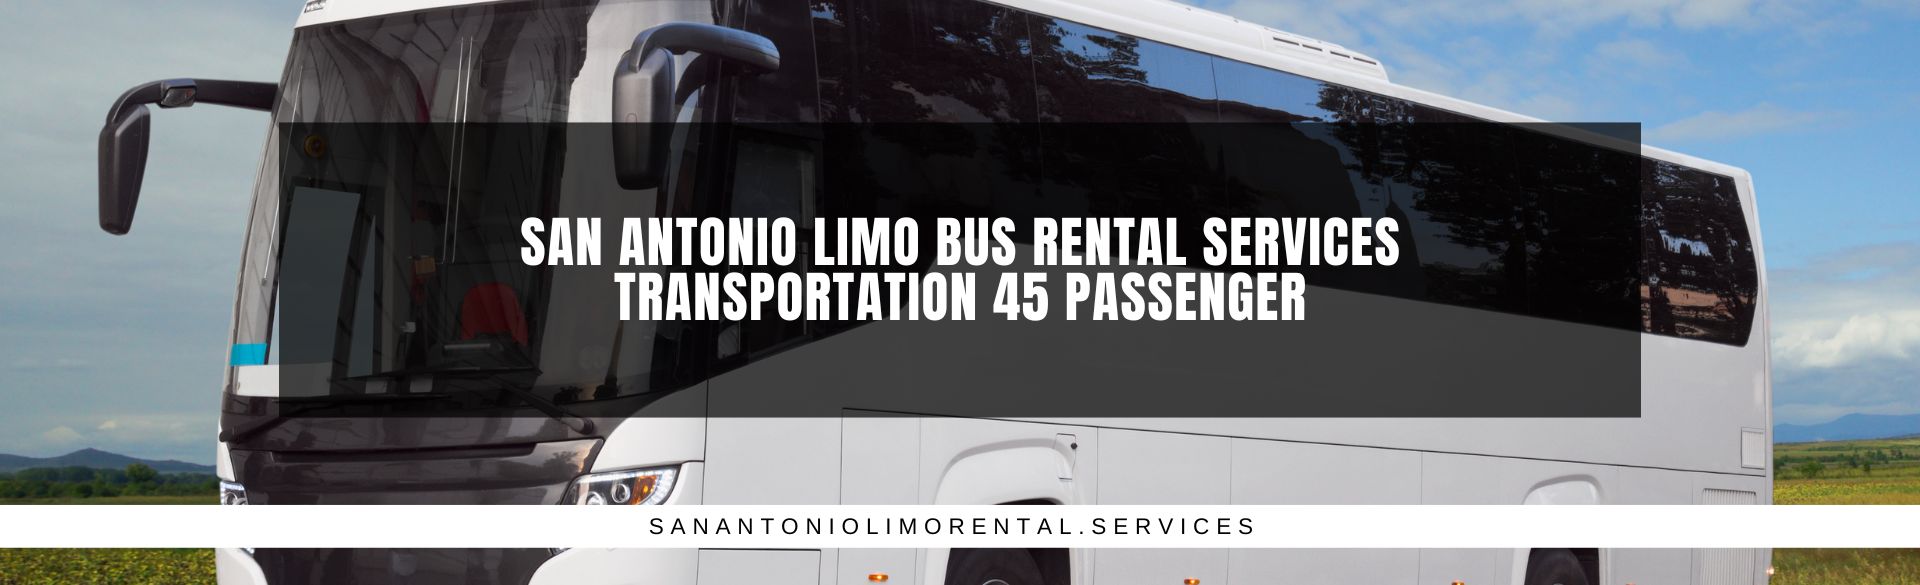 San Antonio Limo Bus Rental Services Transportation 45 Passenger